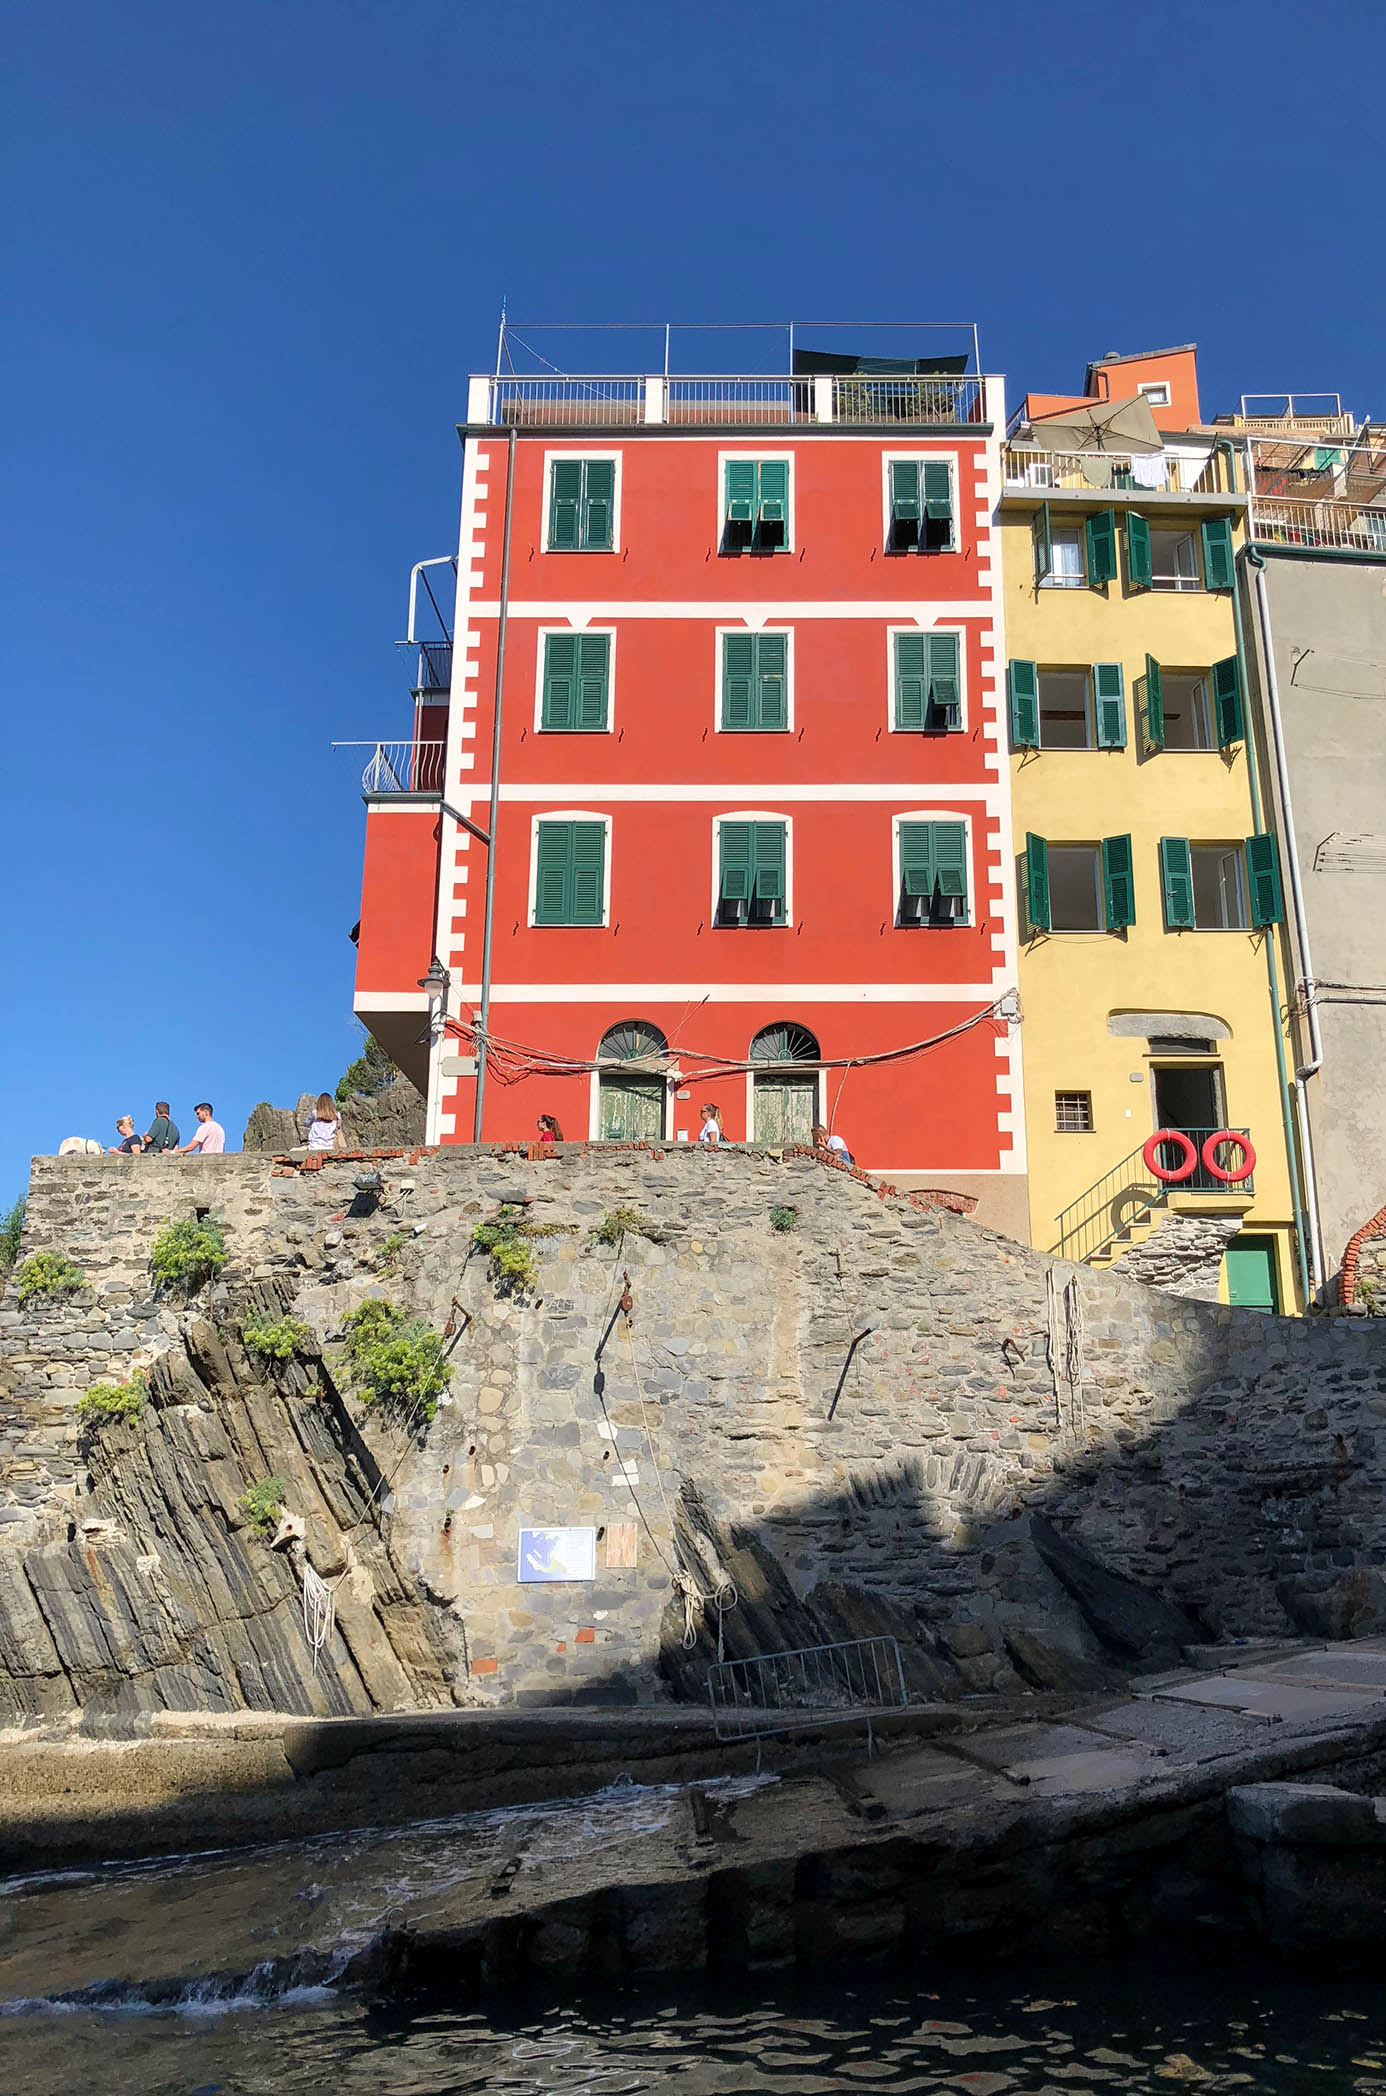 Colorful buildings in Cinque Terre, Italy